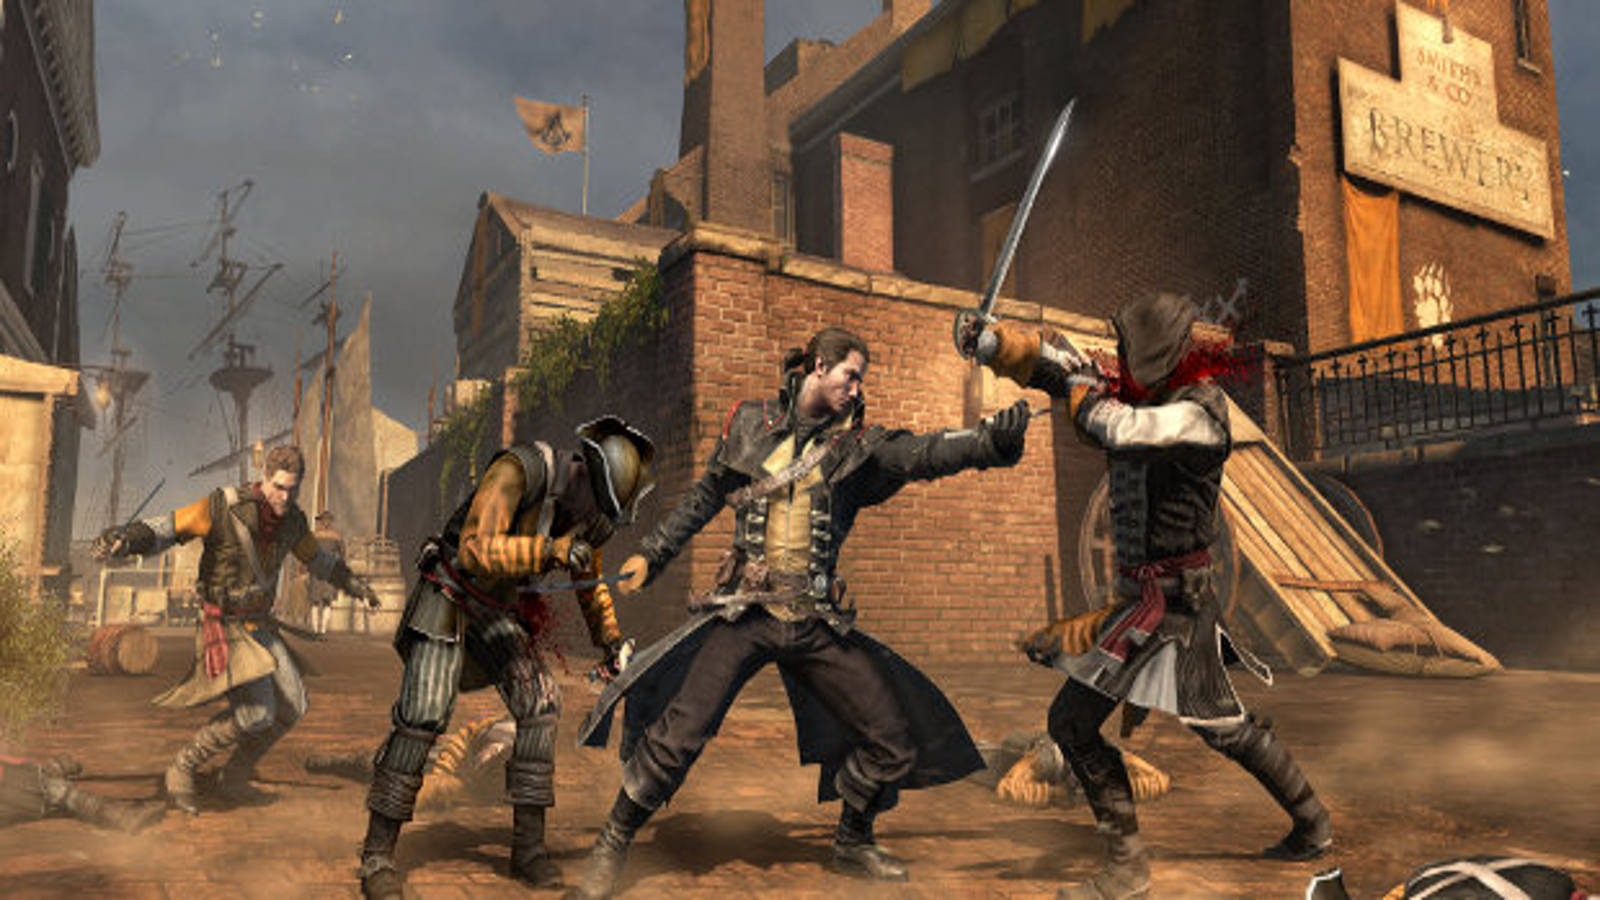 Assassin’s Creed Rogue